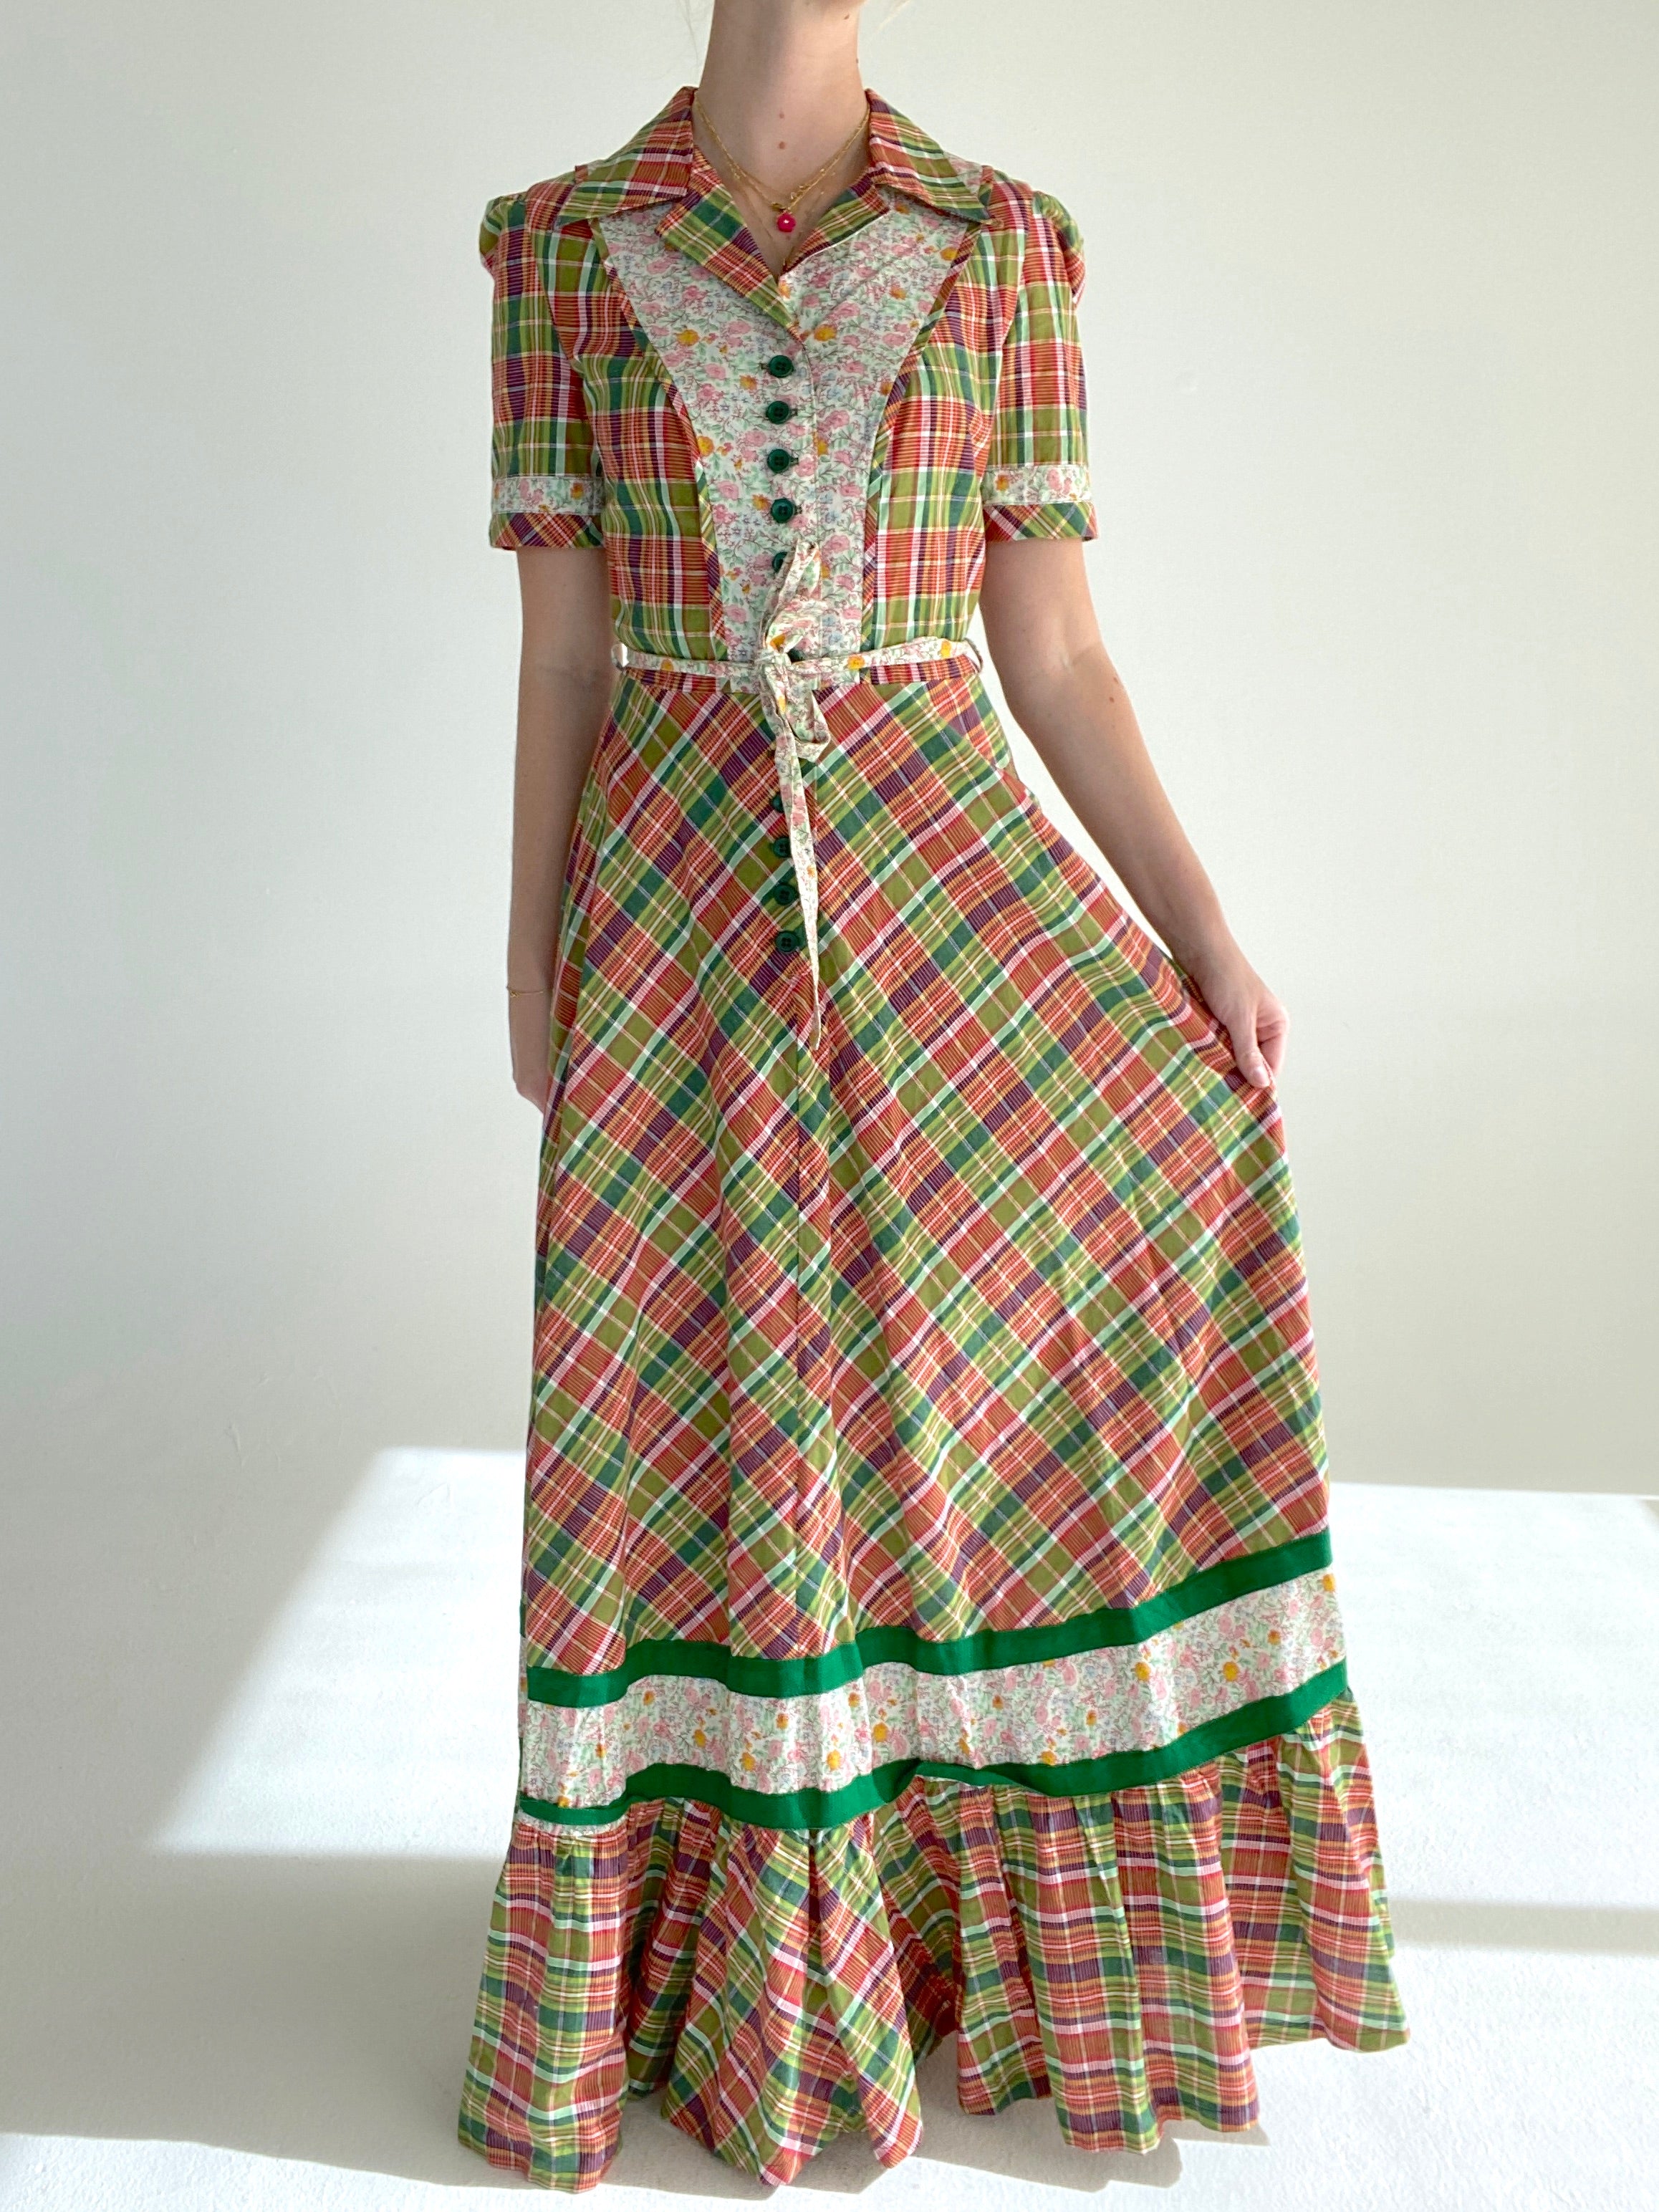 1970's Plaid and Floral Cotton Dress